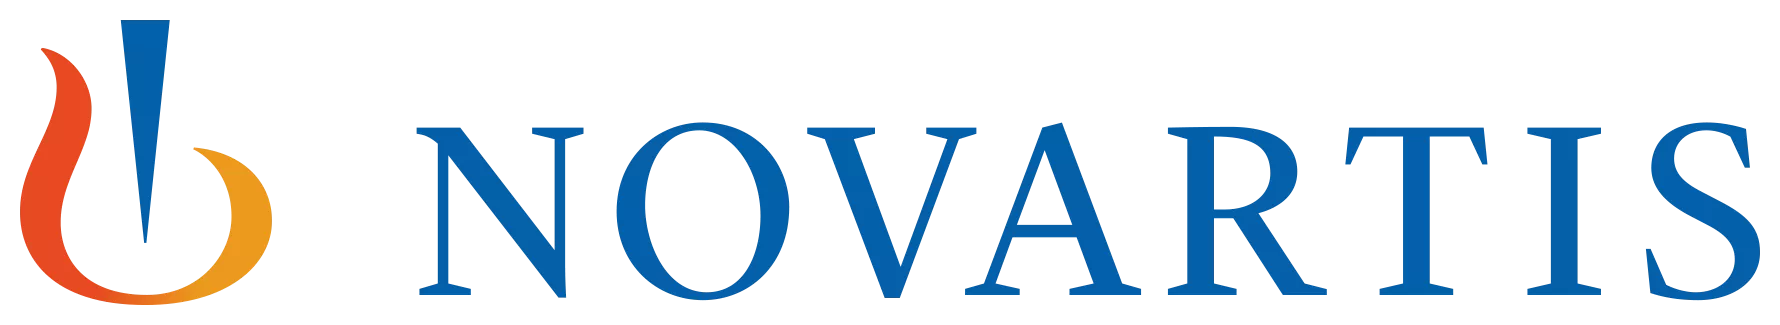 novartis logo transparent.png.webp